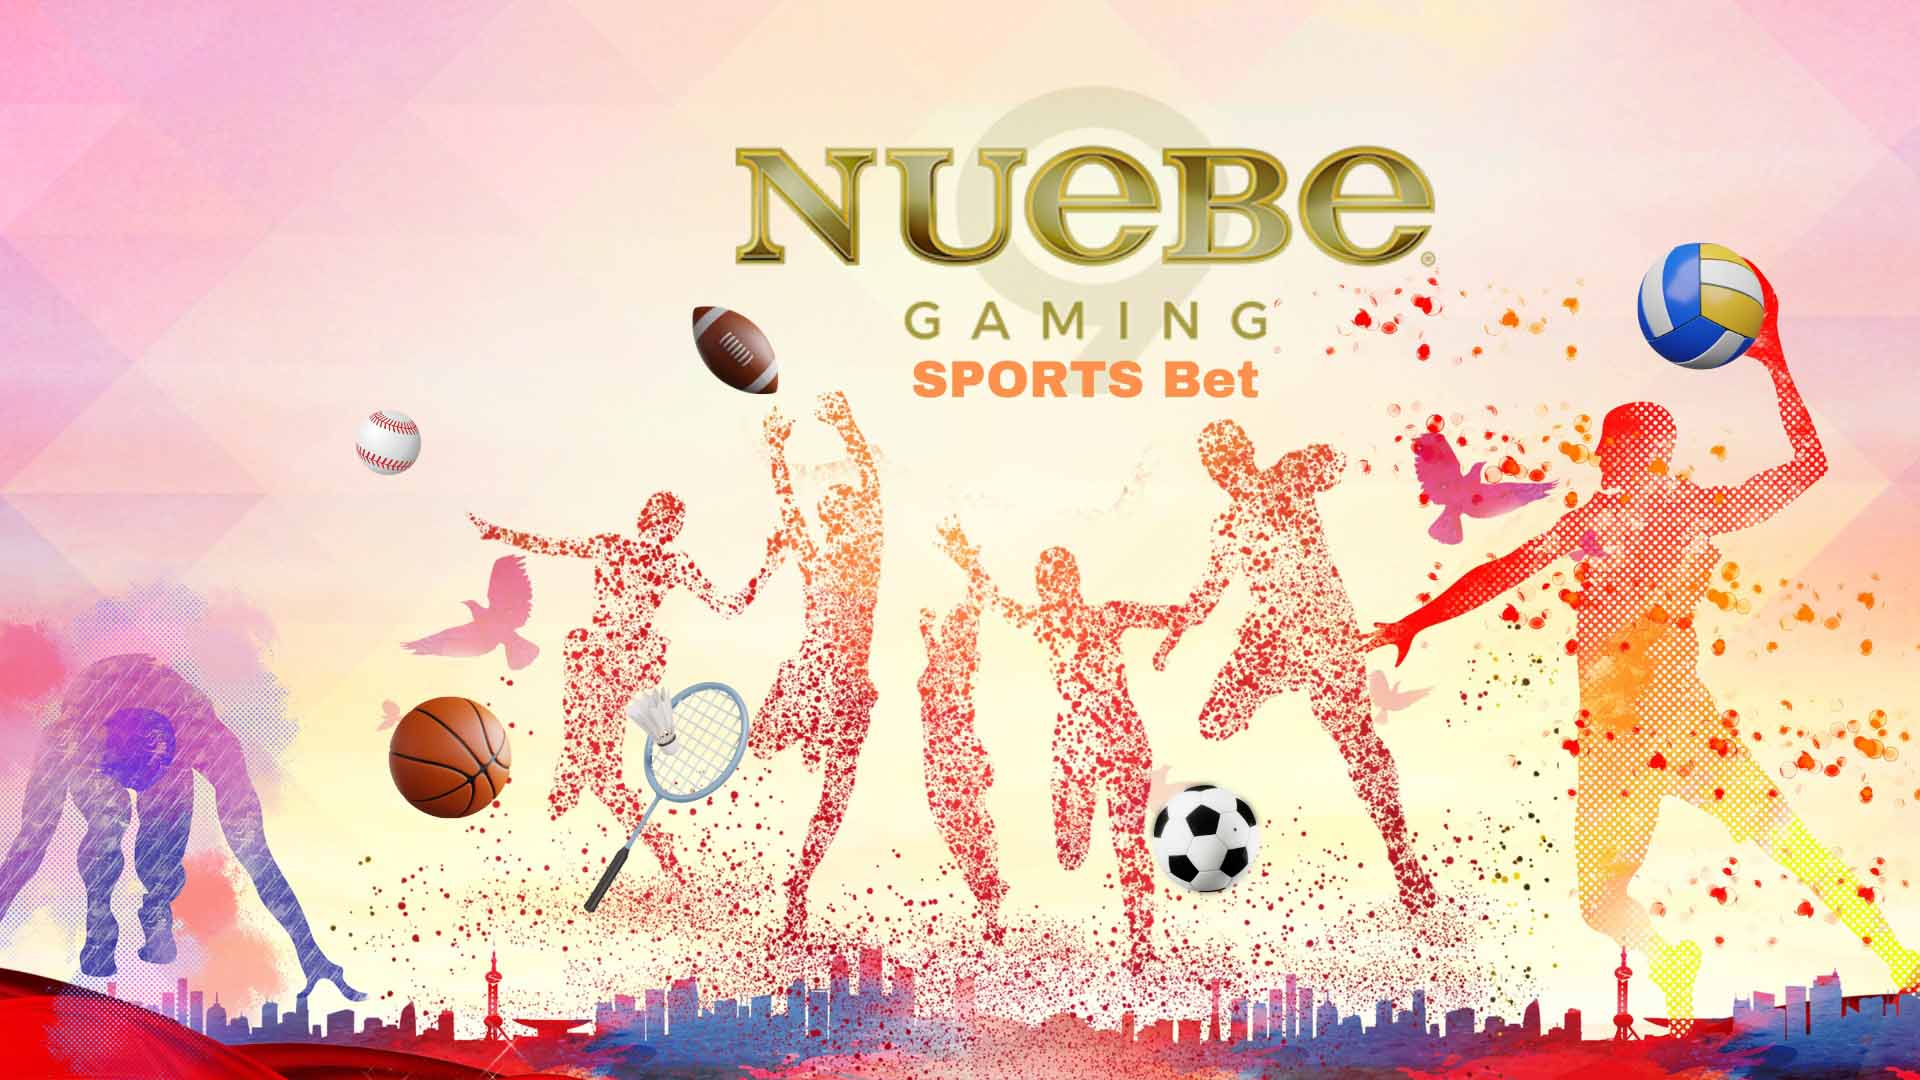 nuebe gaming SPORTS bet best online casino philippines